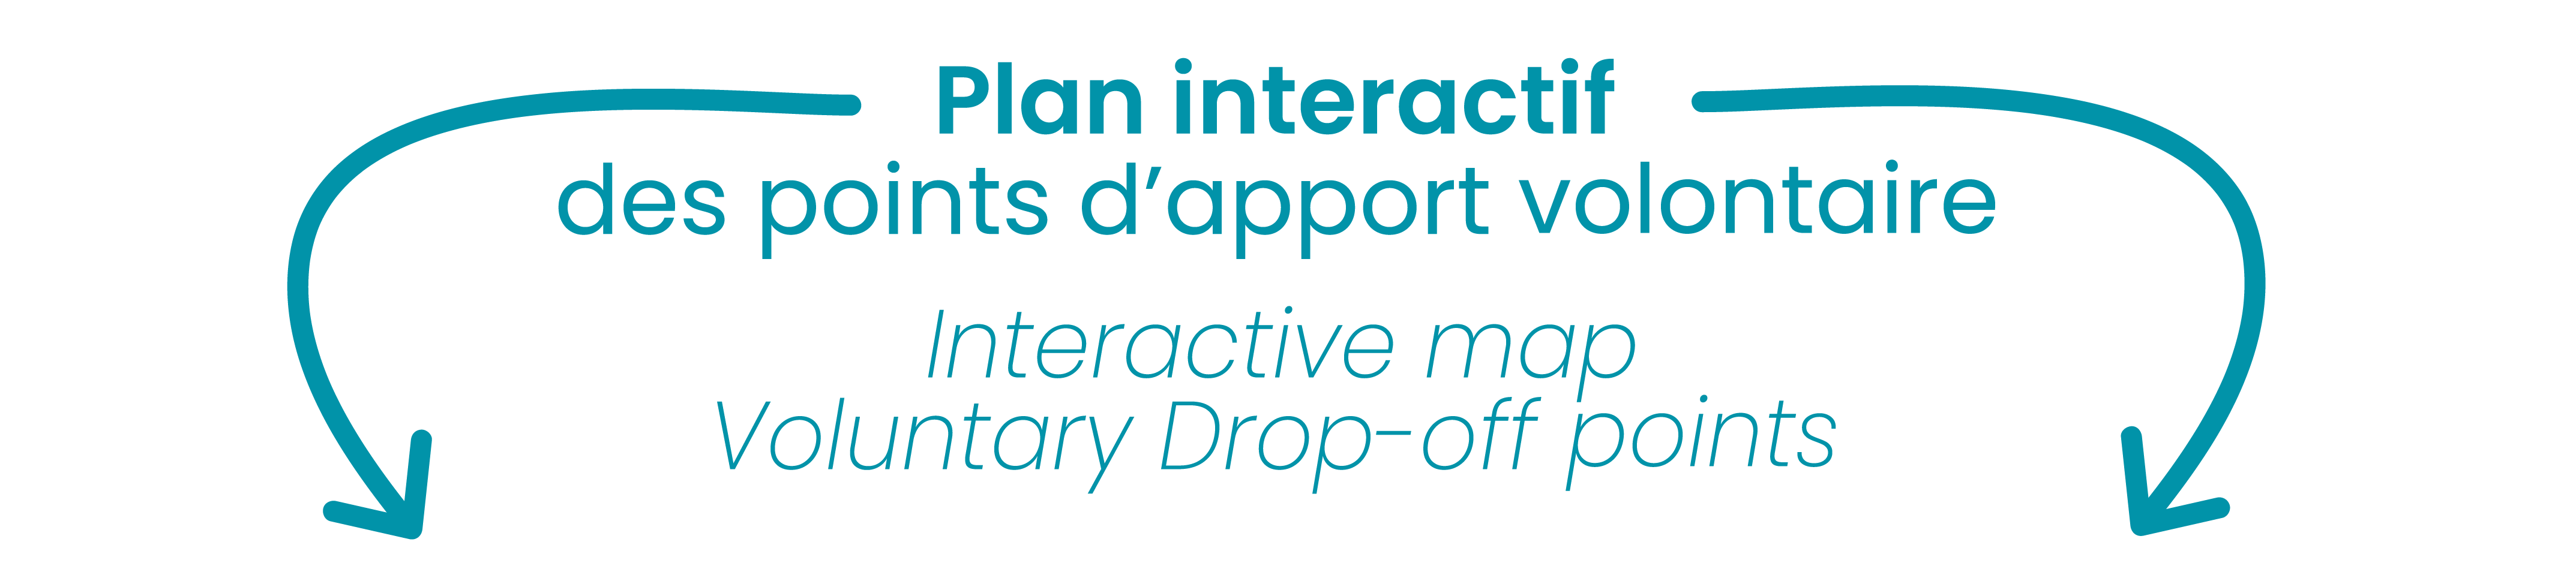 Plan interactif visuel